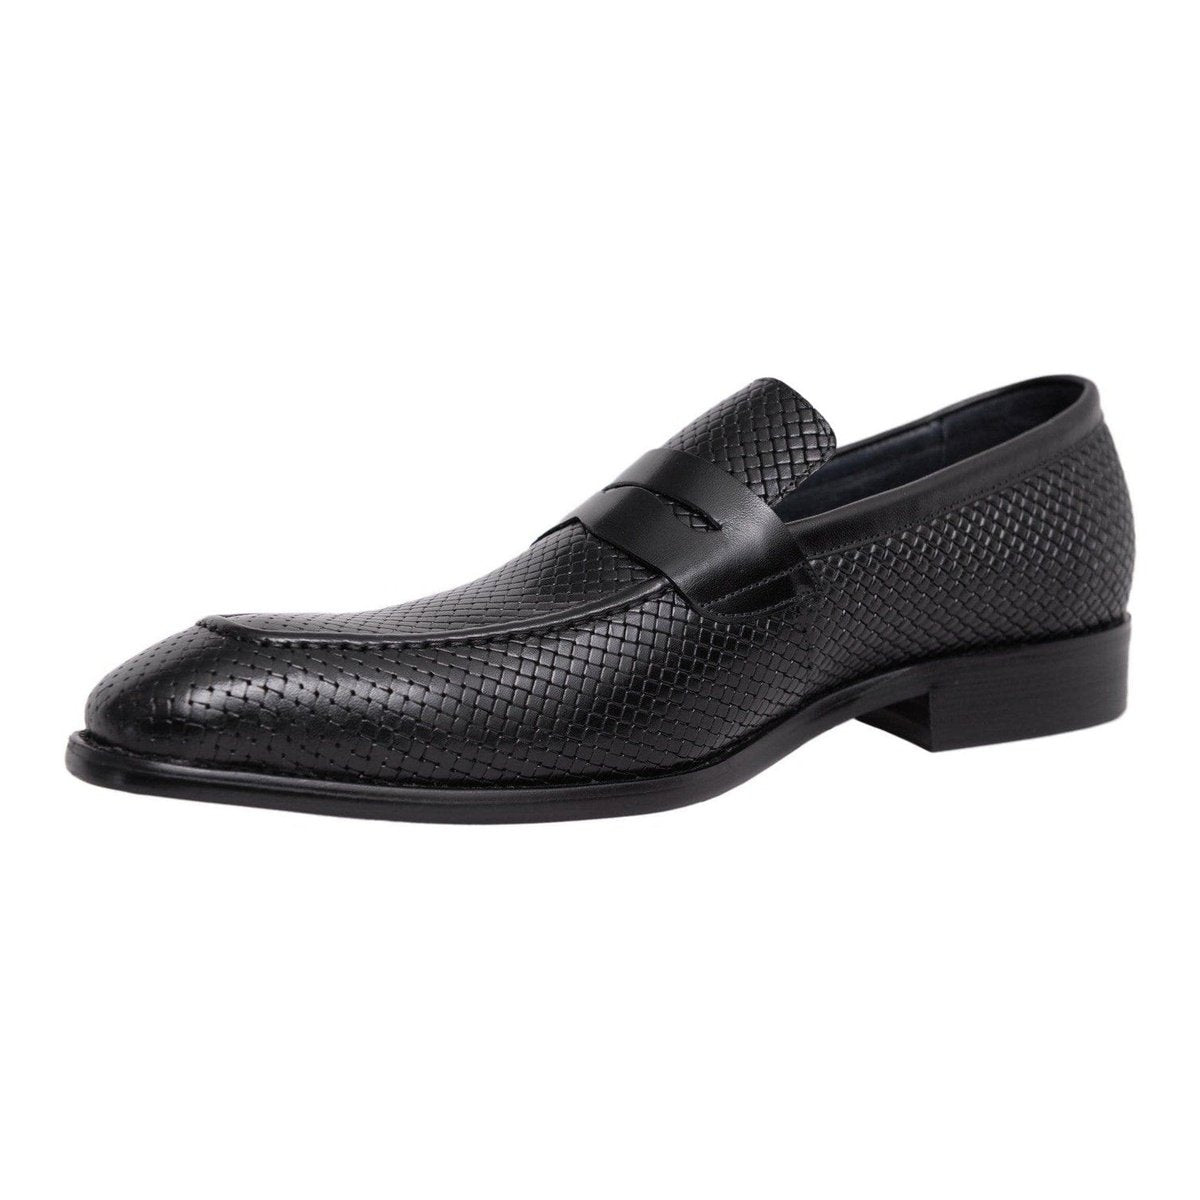 Carrucci SHOES Mens Carrucci Textured Black Slip-on Leather Dress Shoes